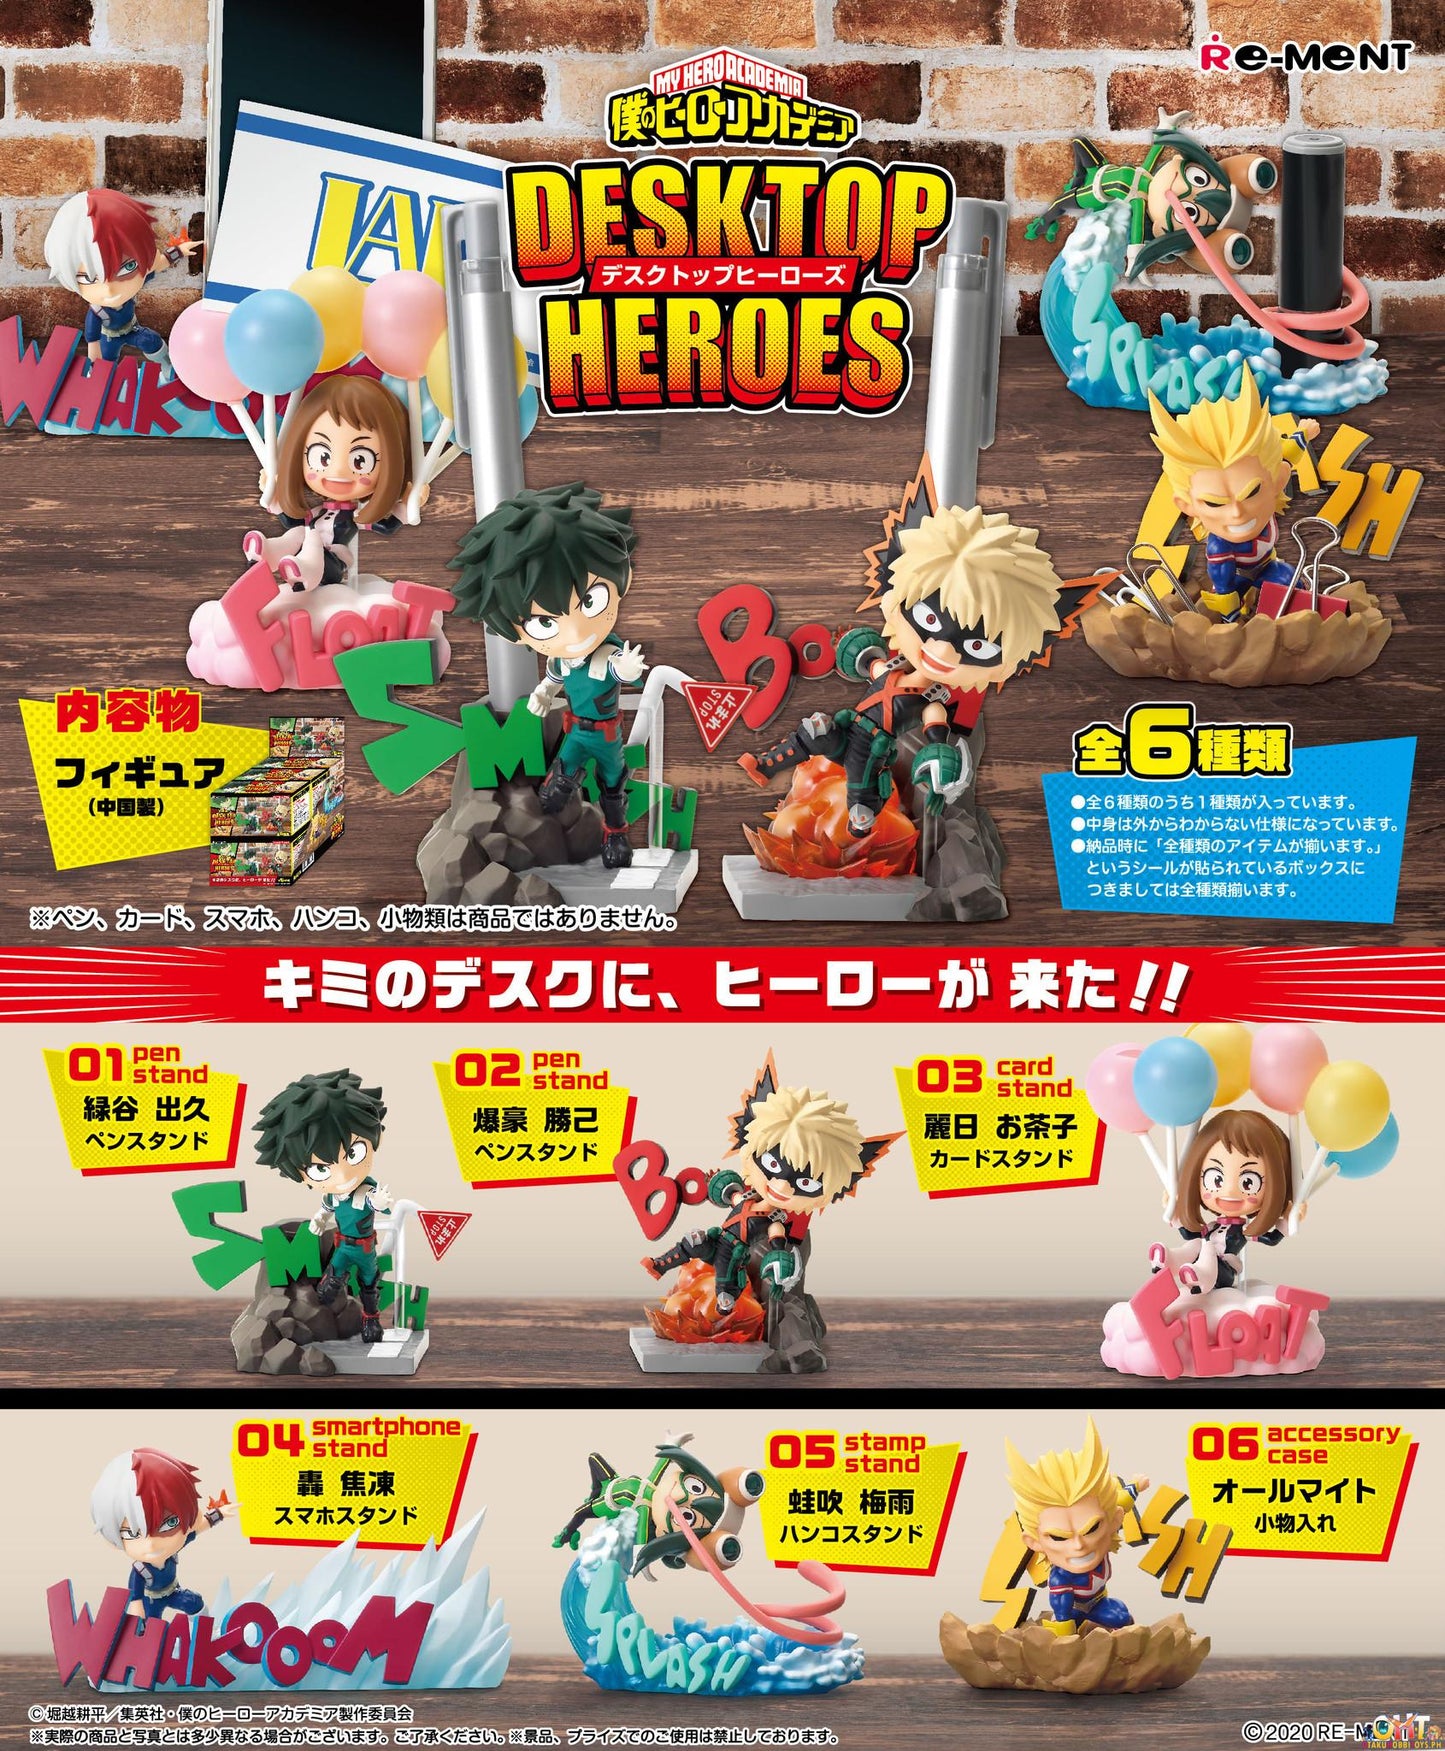 Re-Ment My Hero Academia Desktop Heroes (Box of 6)